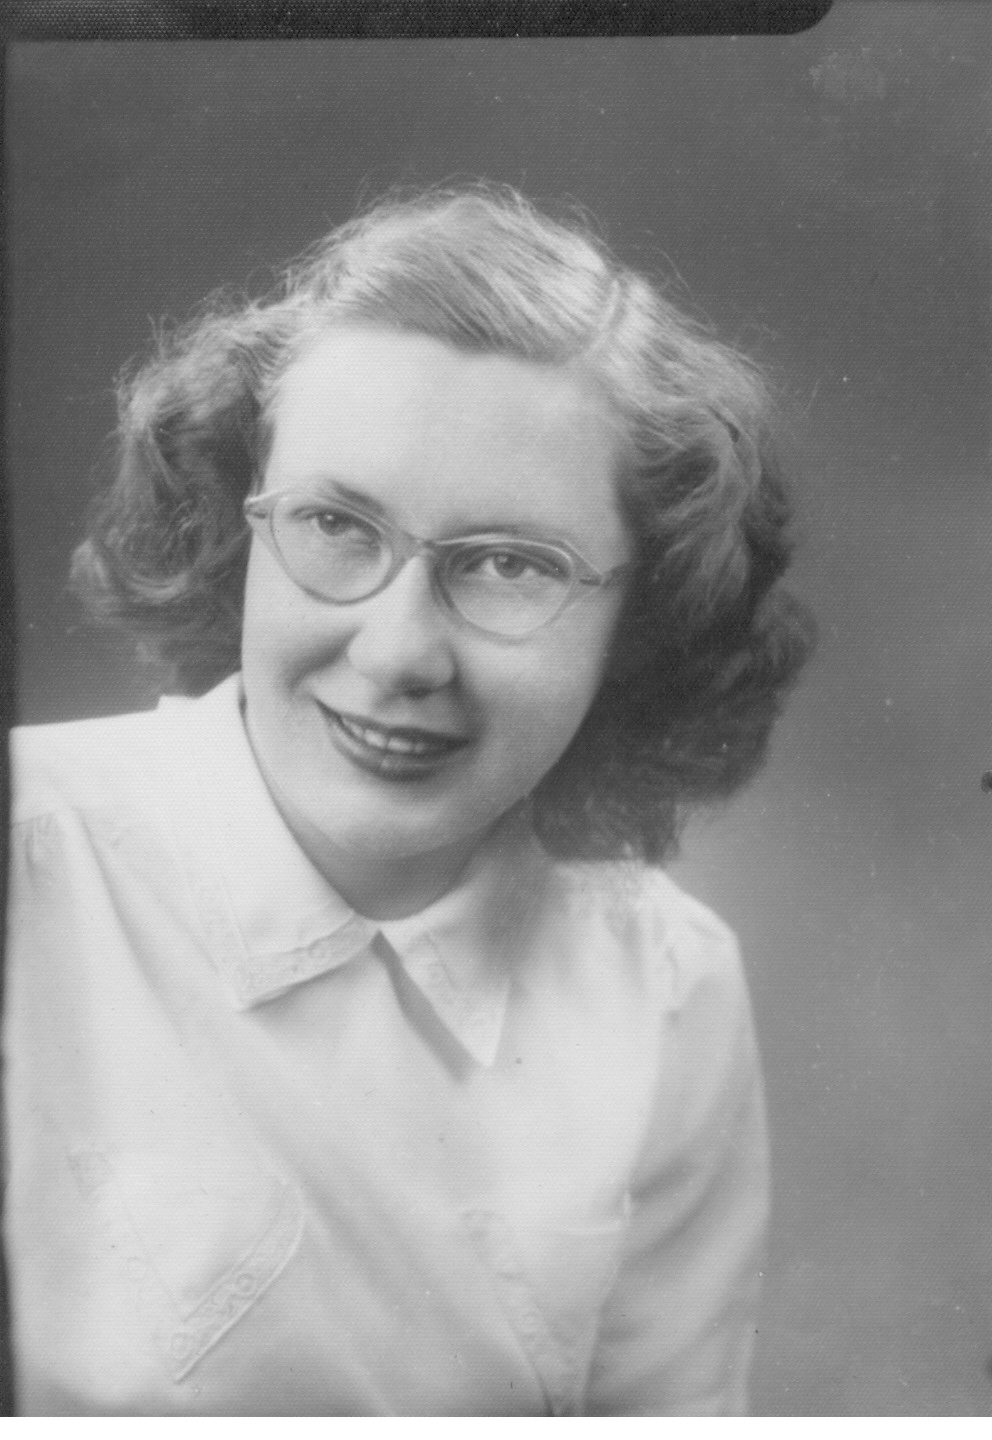 Mary Anne Durbin as a senior in high school